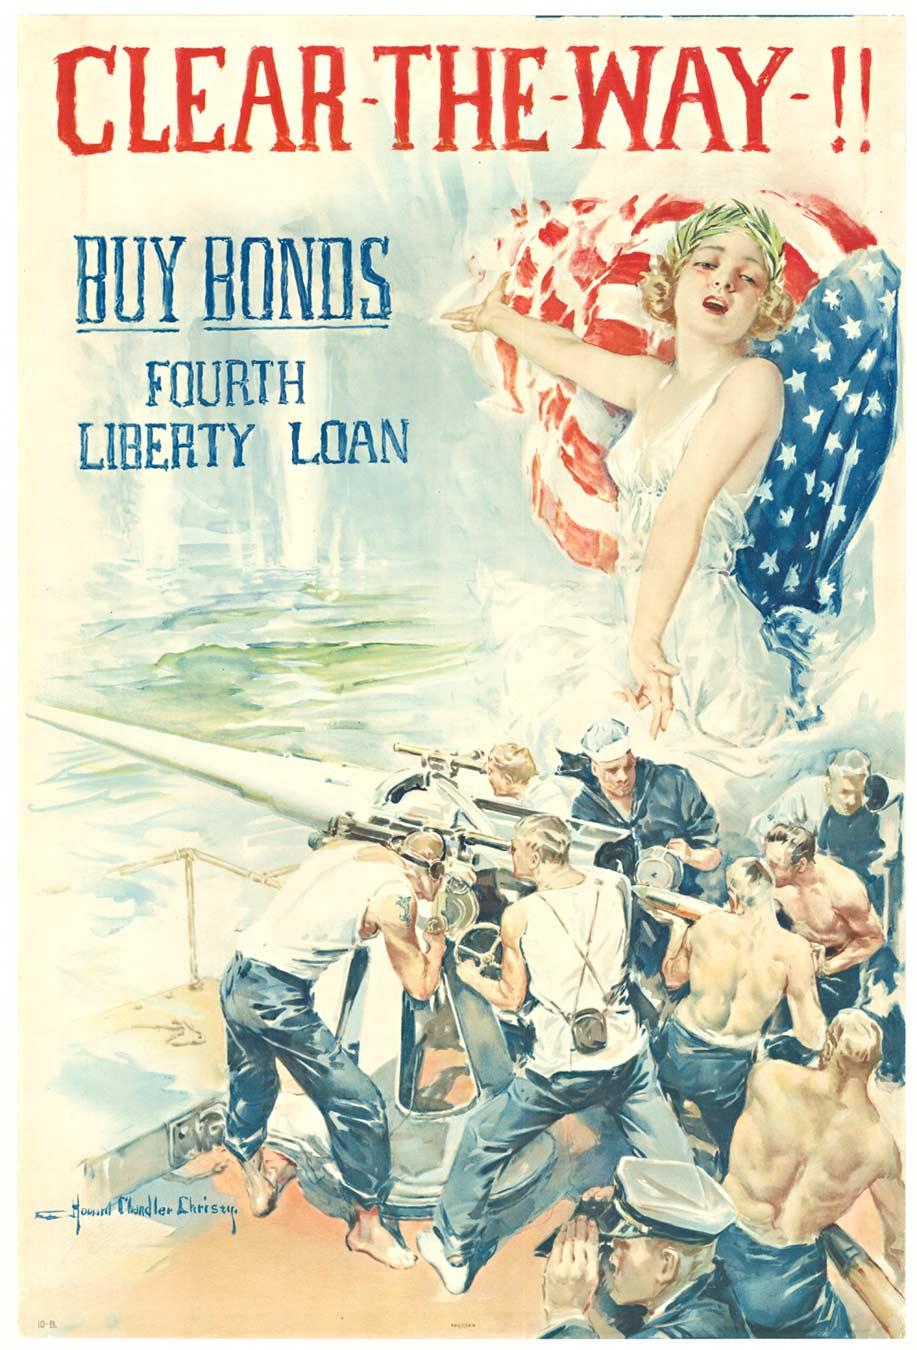 Landscape Print Howard Chandler Christy - Original "Clear the Way!" Affiche vintage « Buy Bonds Fourth Liberty Loans » (Bordes d'achat), 1917